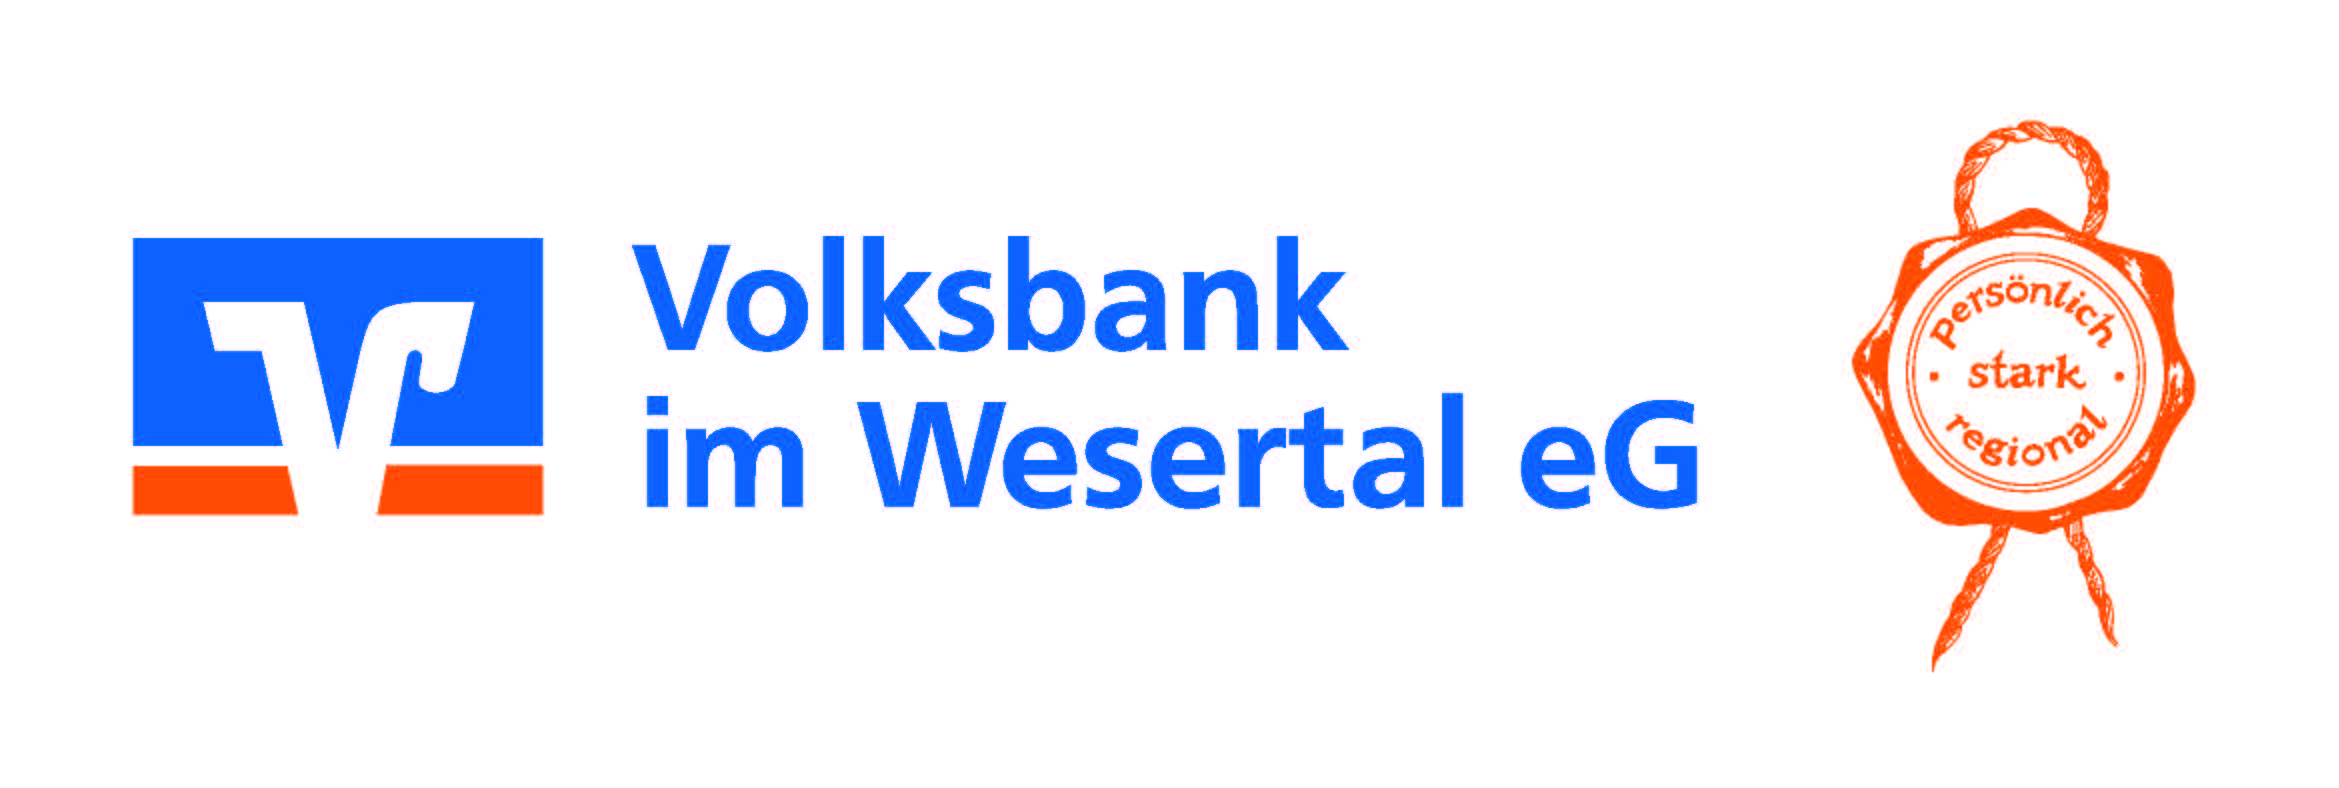 individuell Volksbank